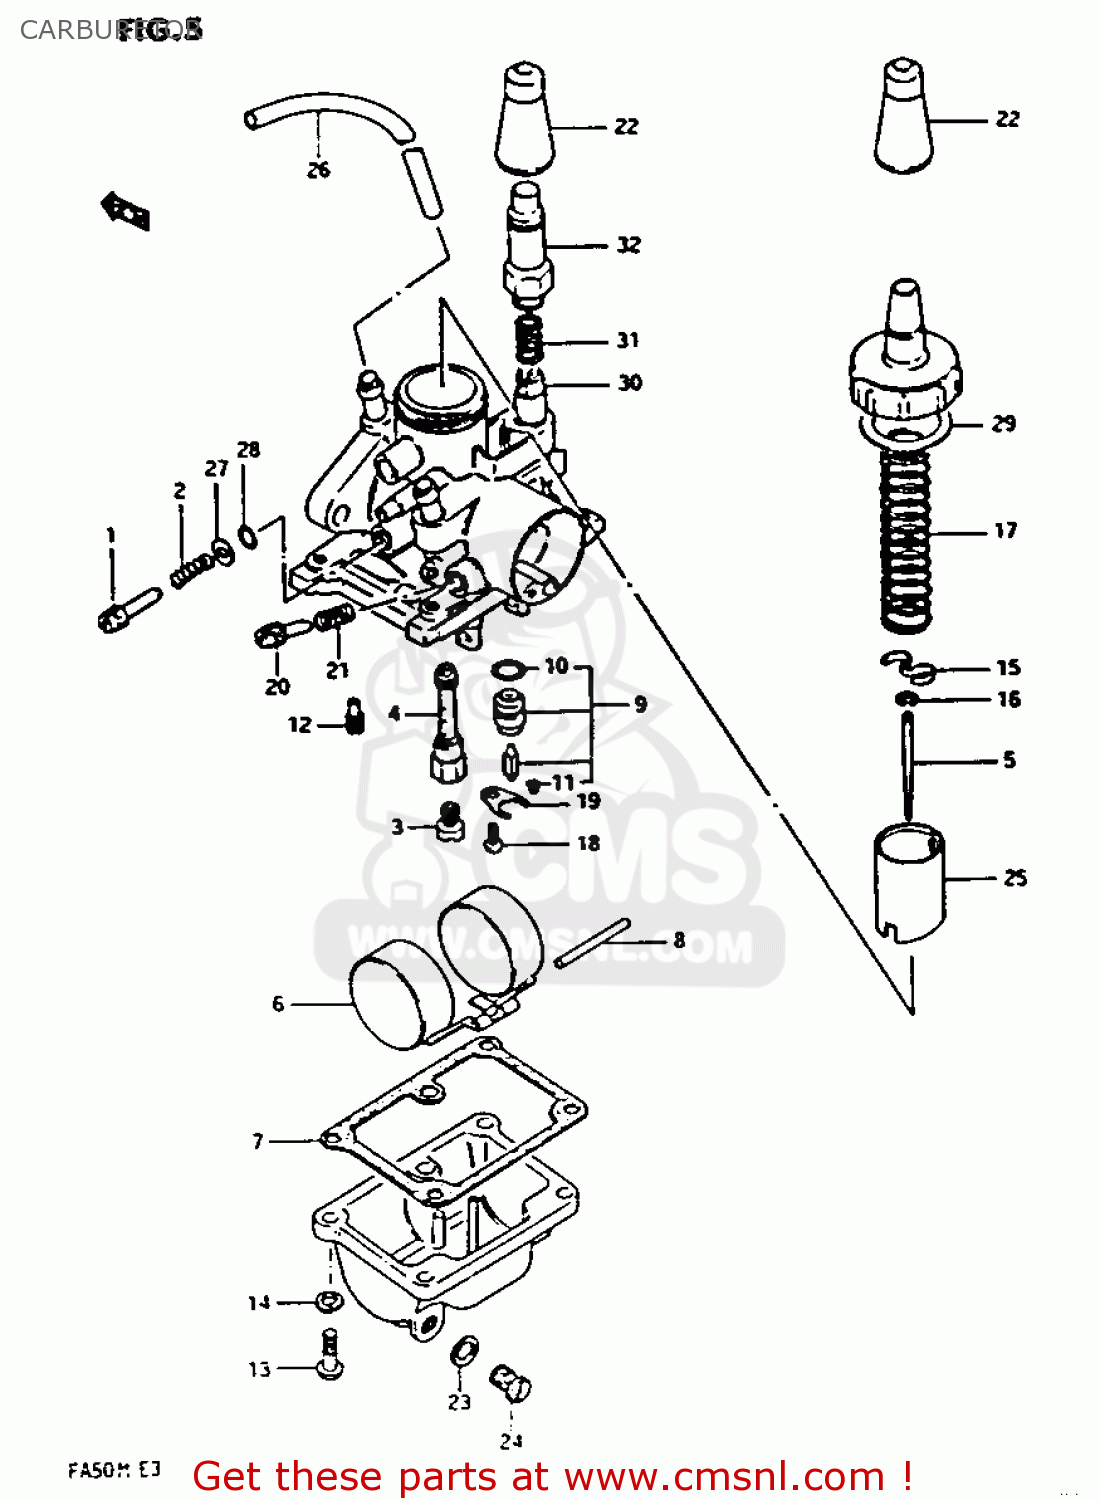 PERFORMANCE du carburateur SUZUKI FA50 FA 50 1980-1991 Scooter cyclomoteur navette Carb